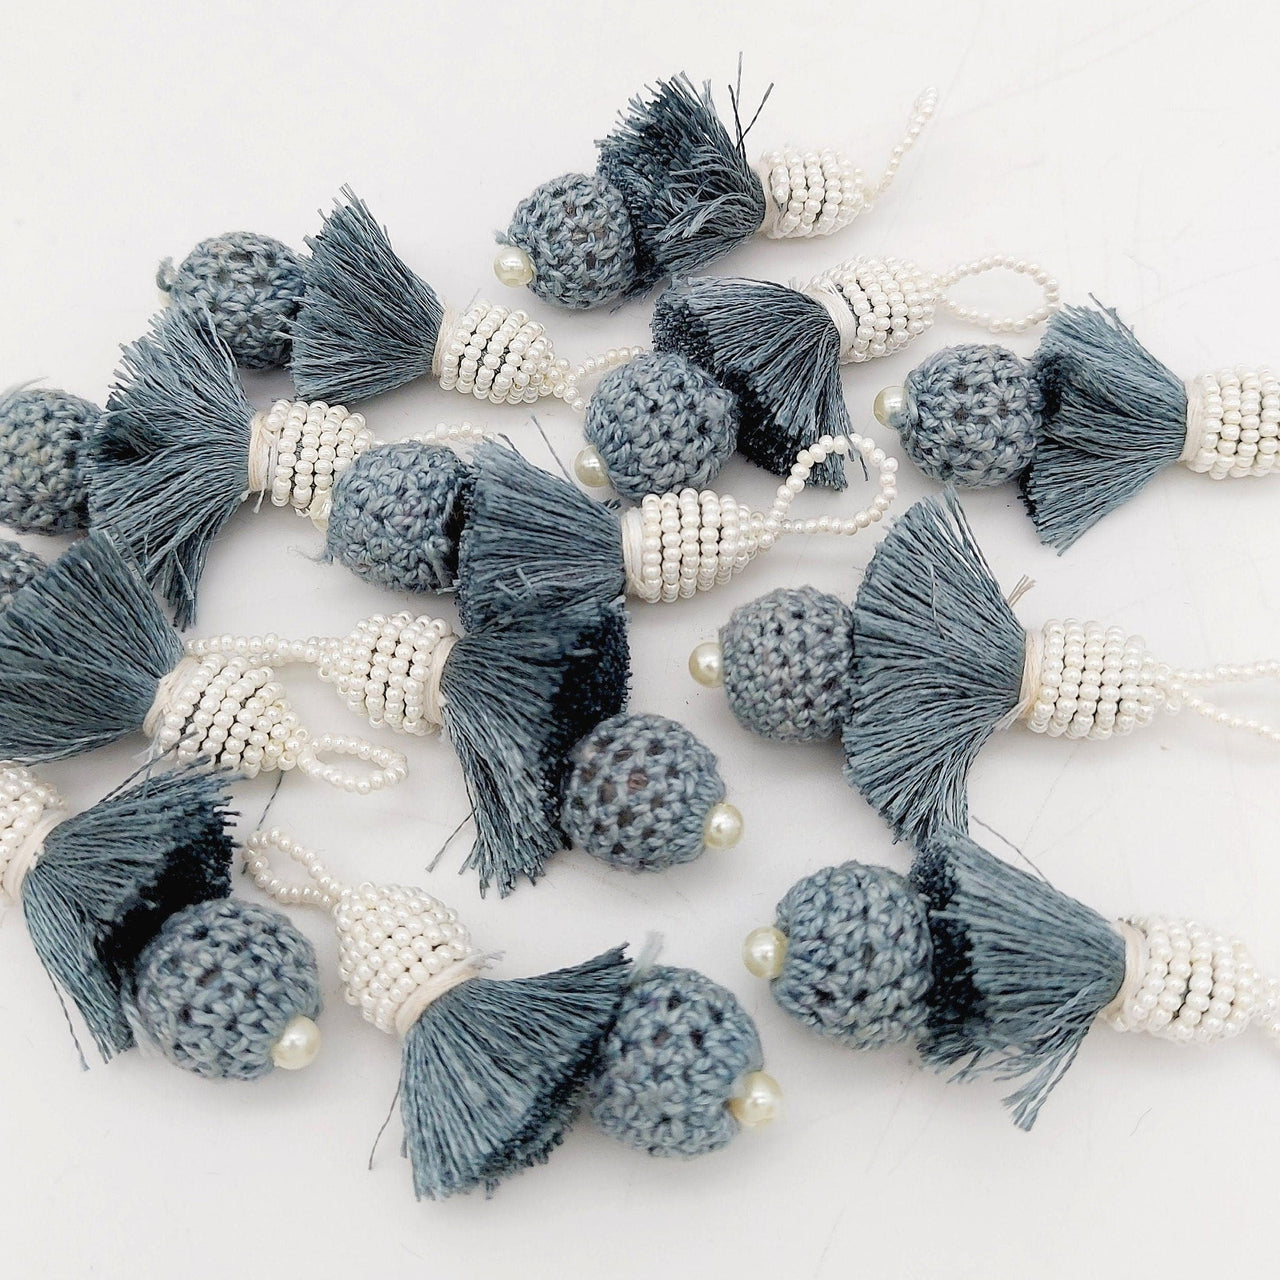 Grey Crochet Ball Tassels With White Pearls Beads, Tassel Charms, Nylon Tassels x 2